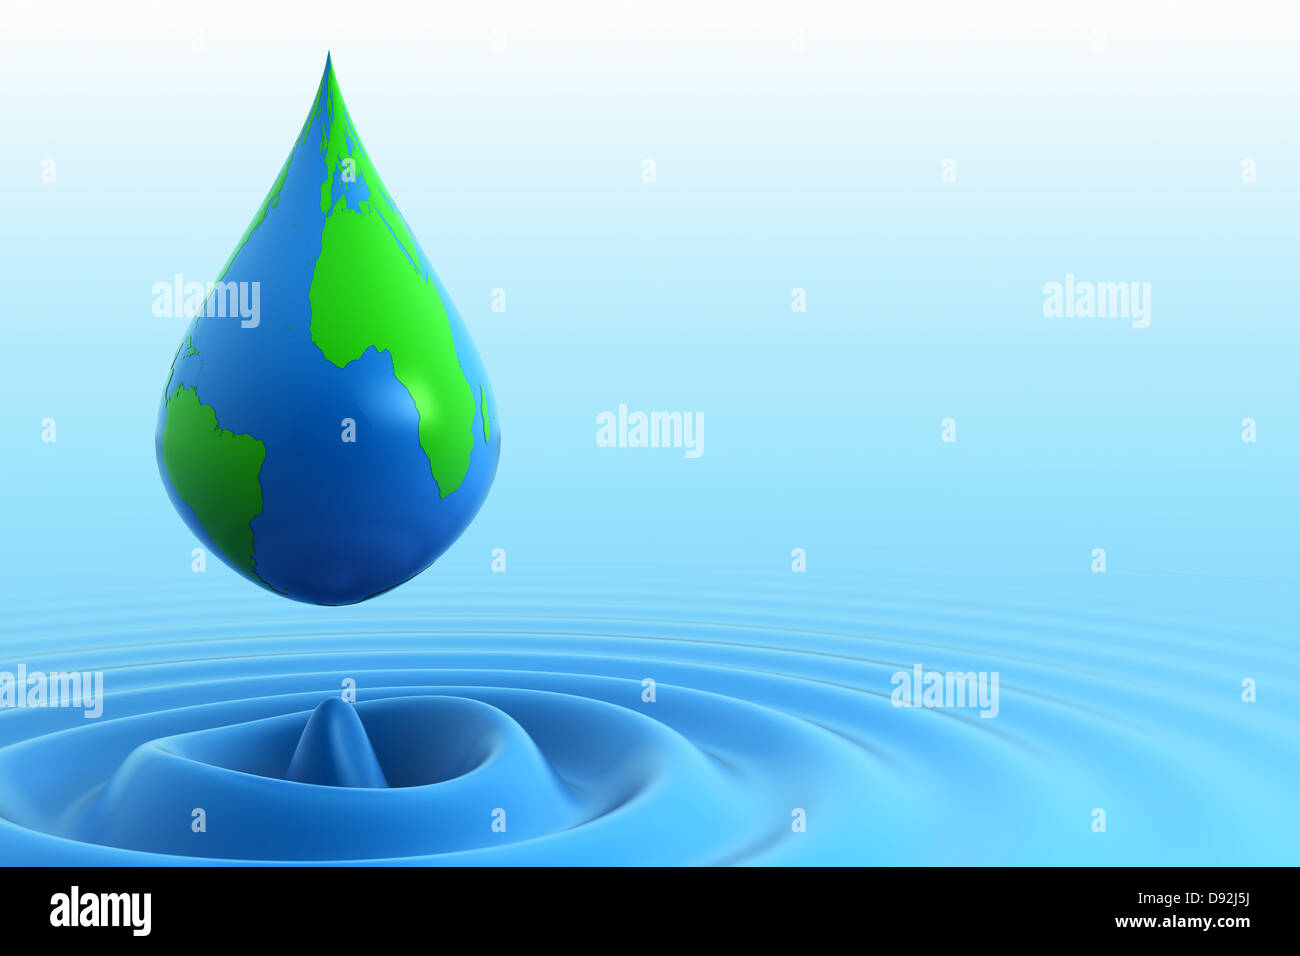 Water drops PNG Image  Water drop logo, Water drops, Water drop